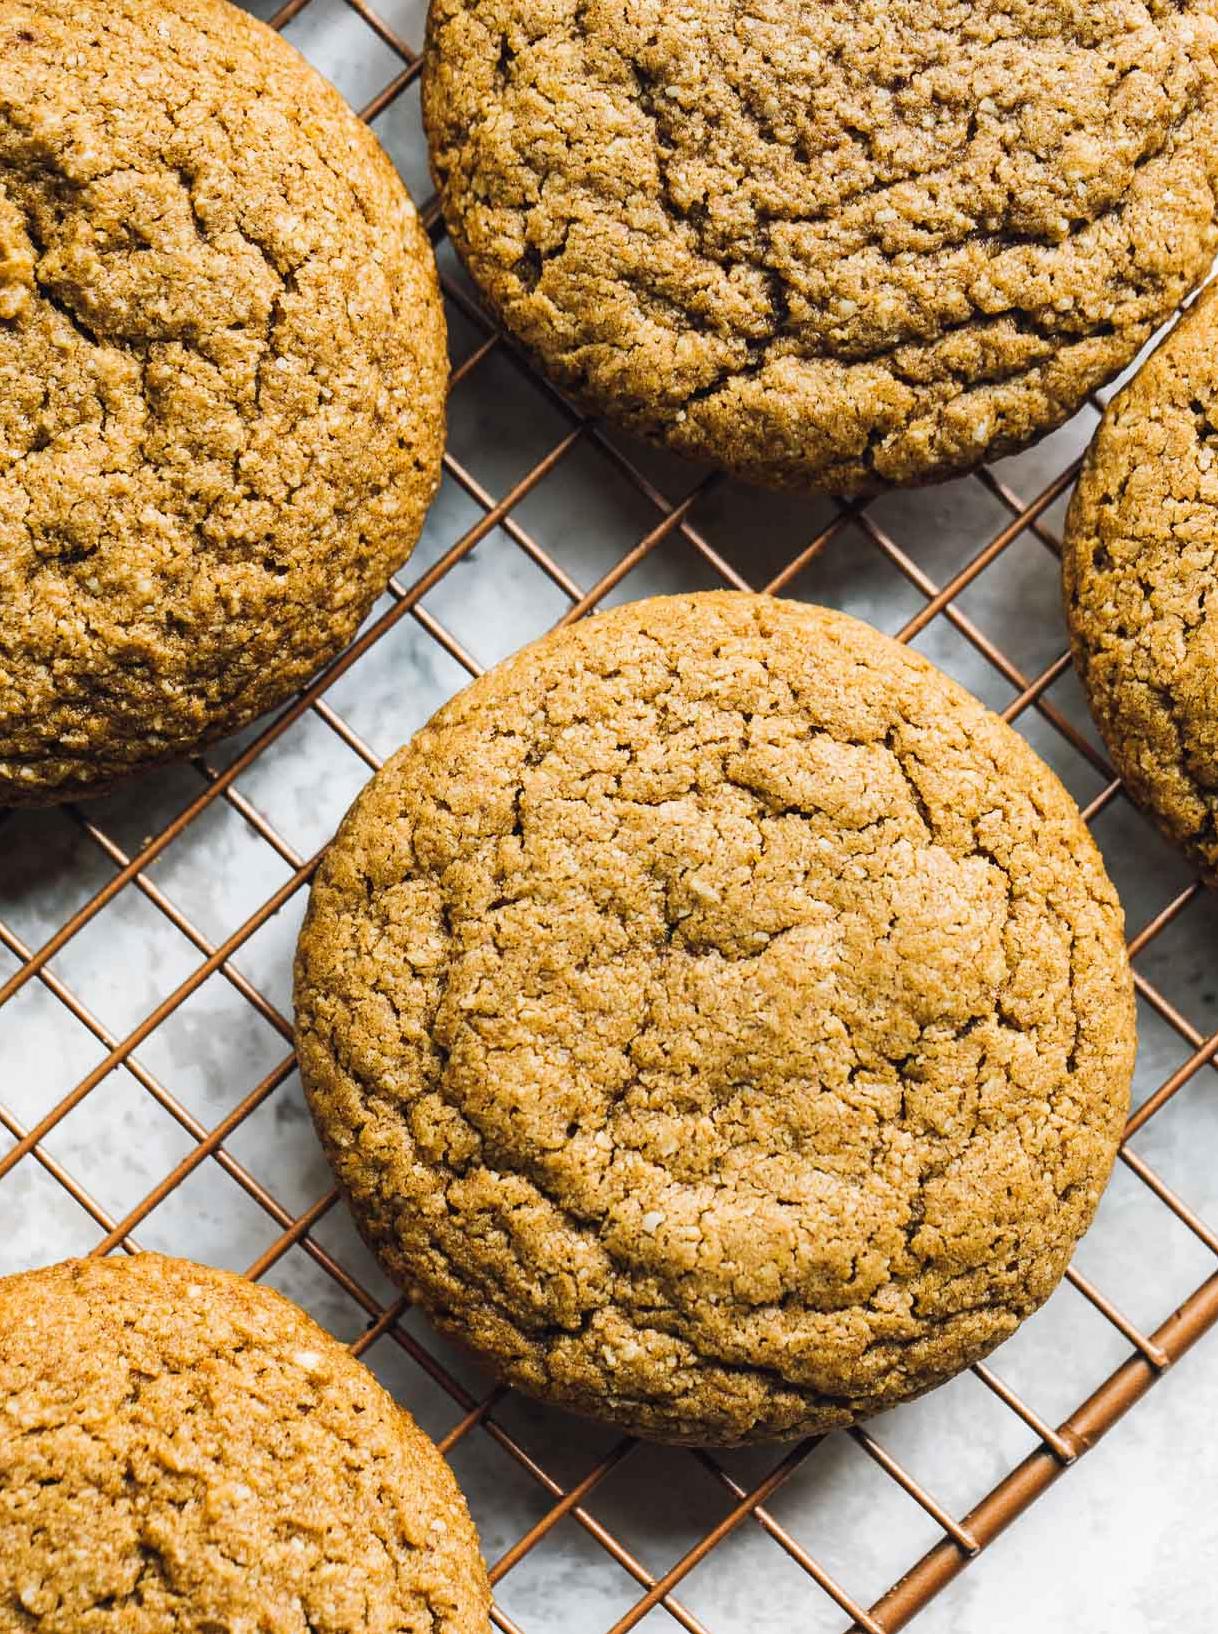  The perfect fall treat: gluten-free pumpkin cookies.